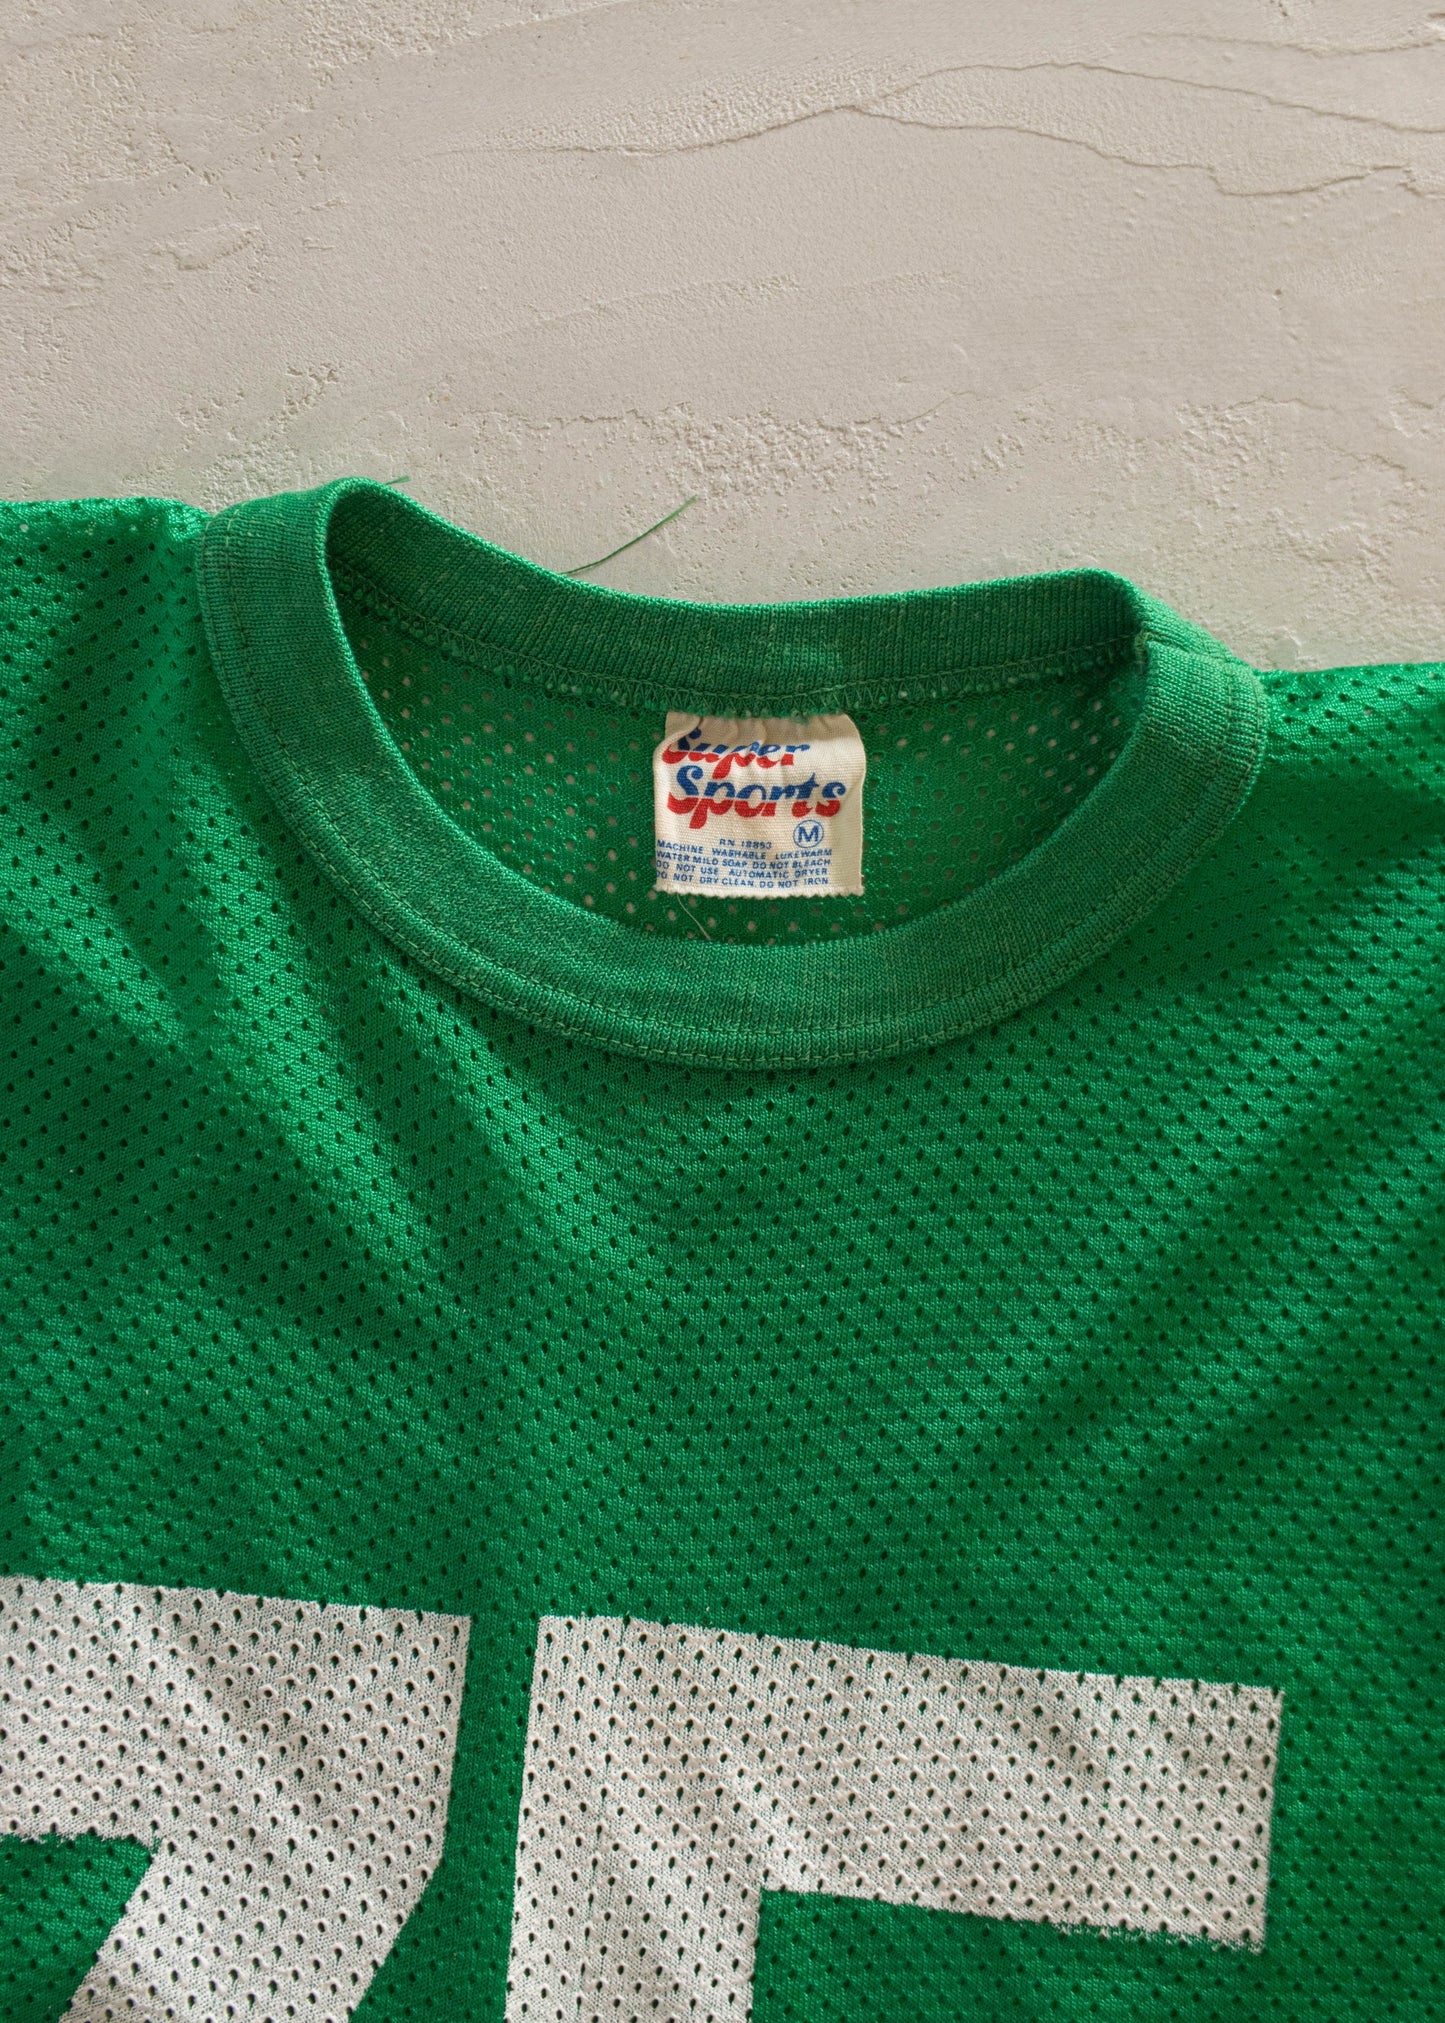 1980s Super Sports Mesh Sports Jersey Size S/M